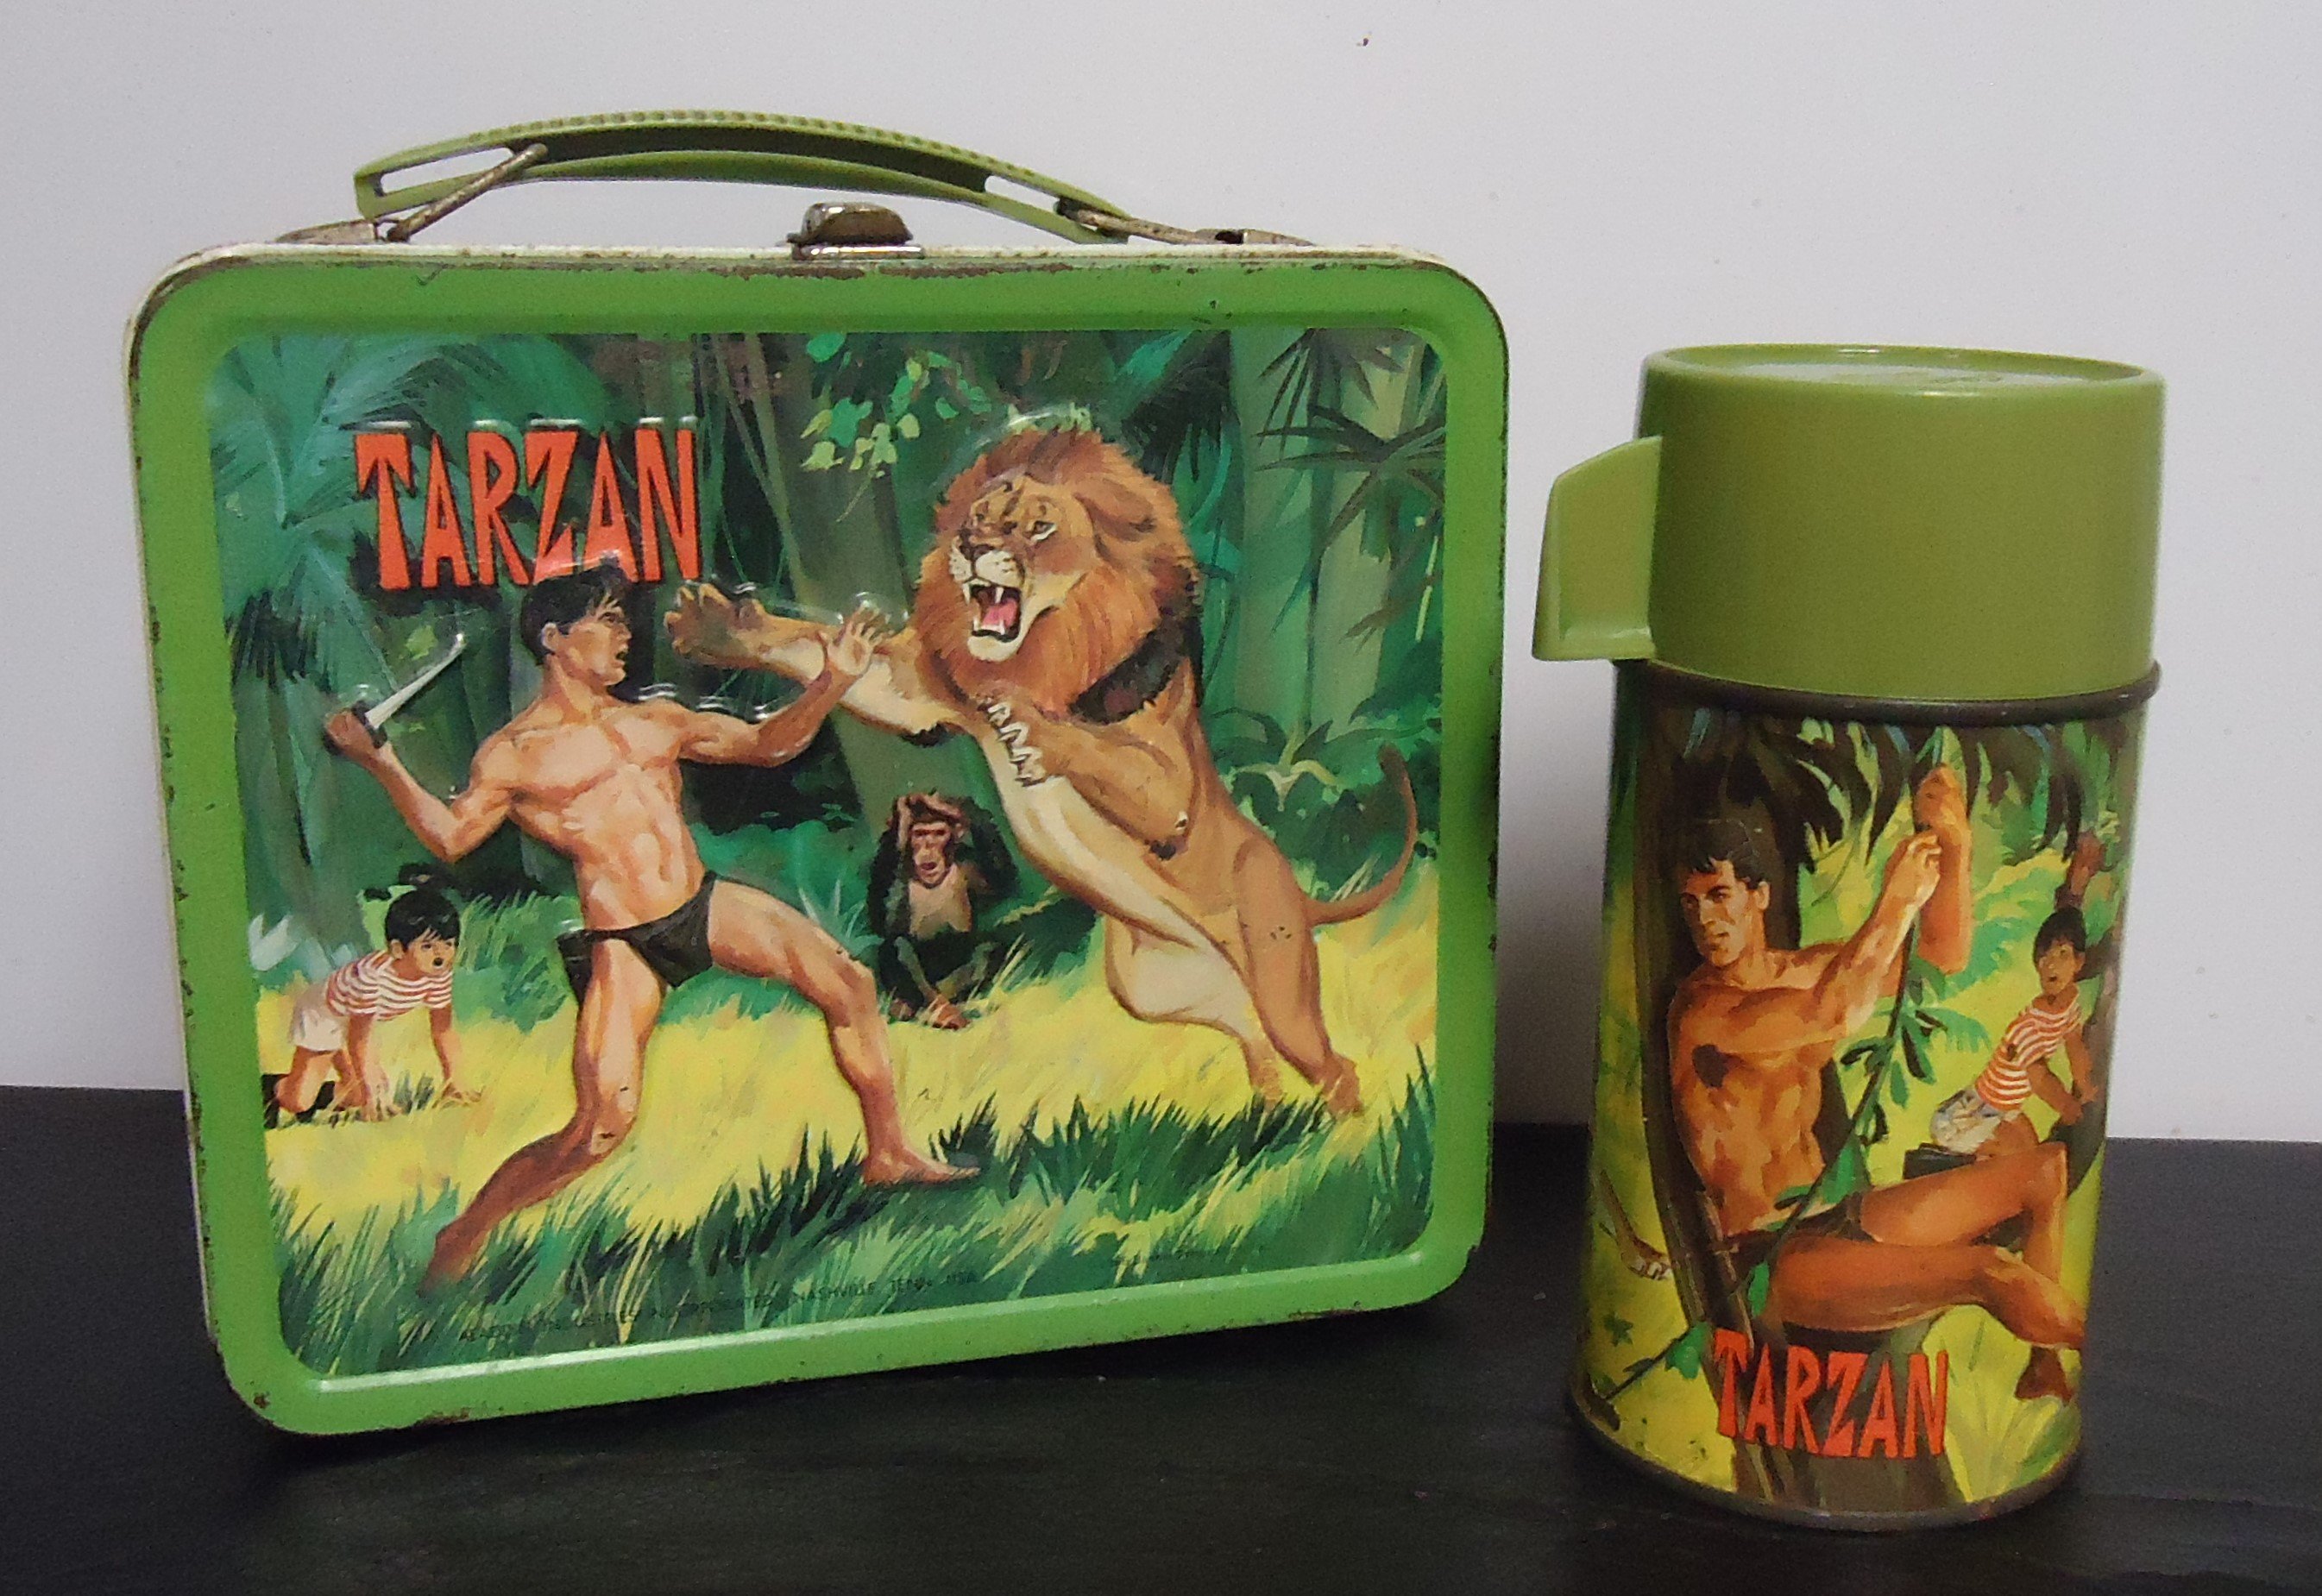 (14) "Tarzan" Metal Lunch Box
W/ Thermos
$150.00